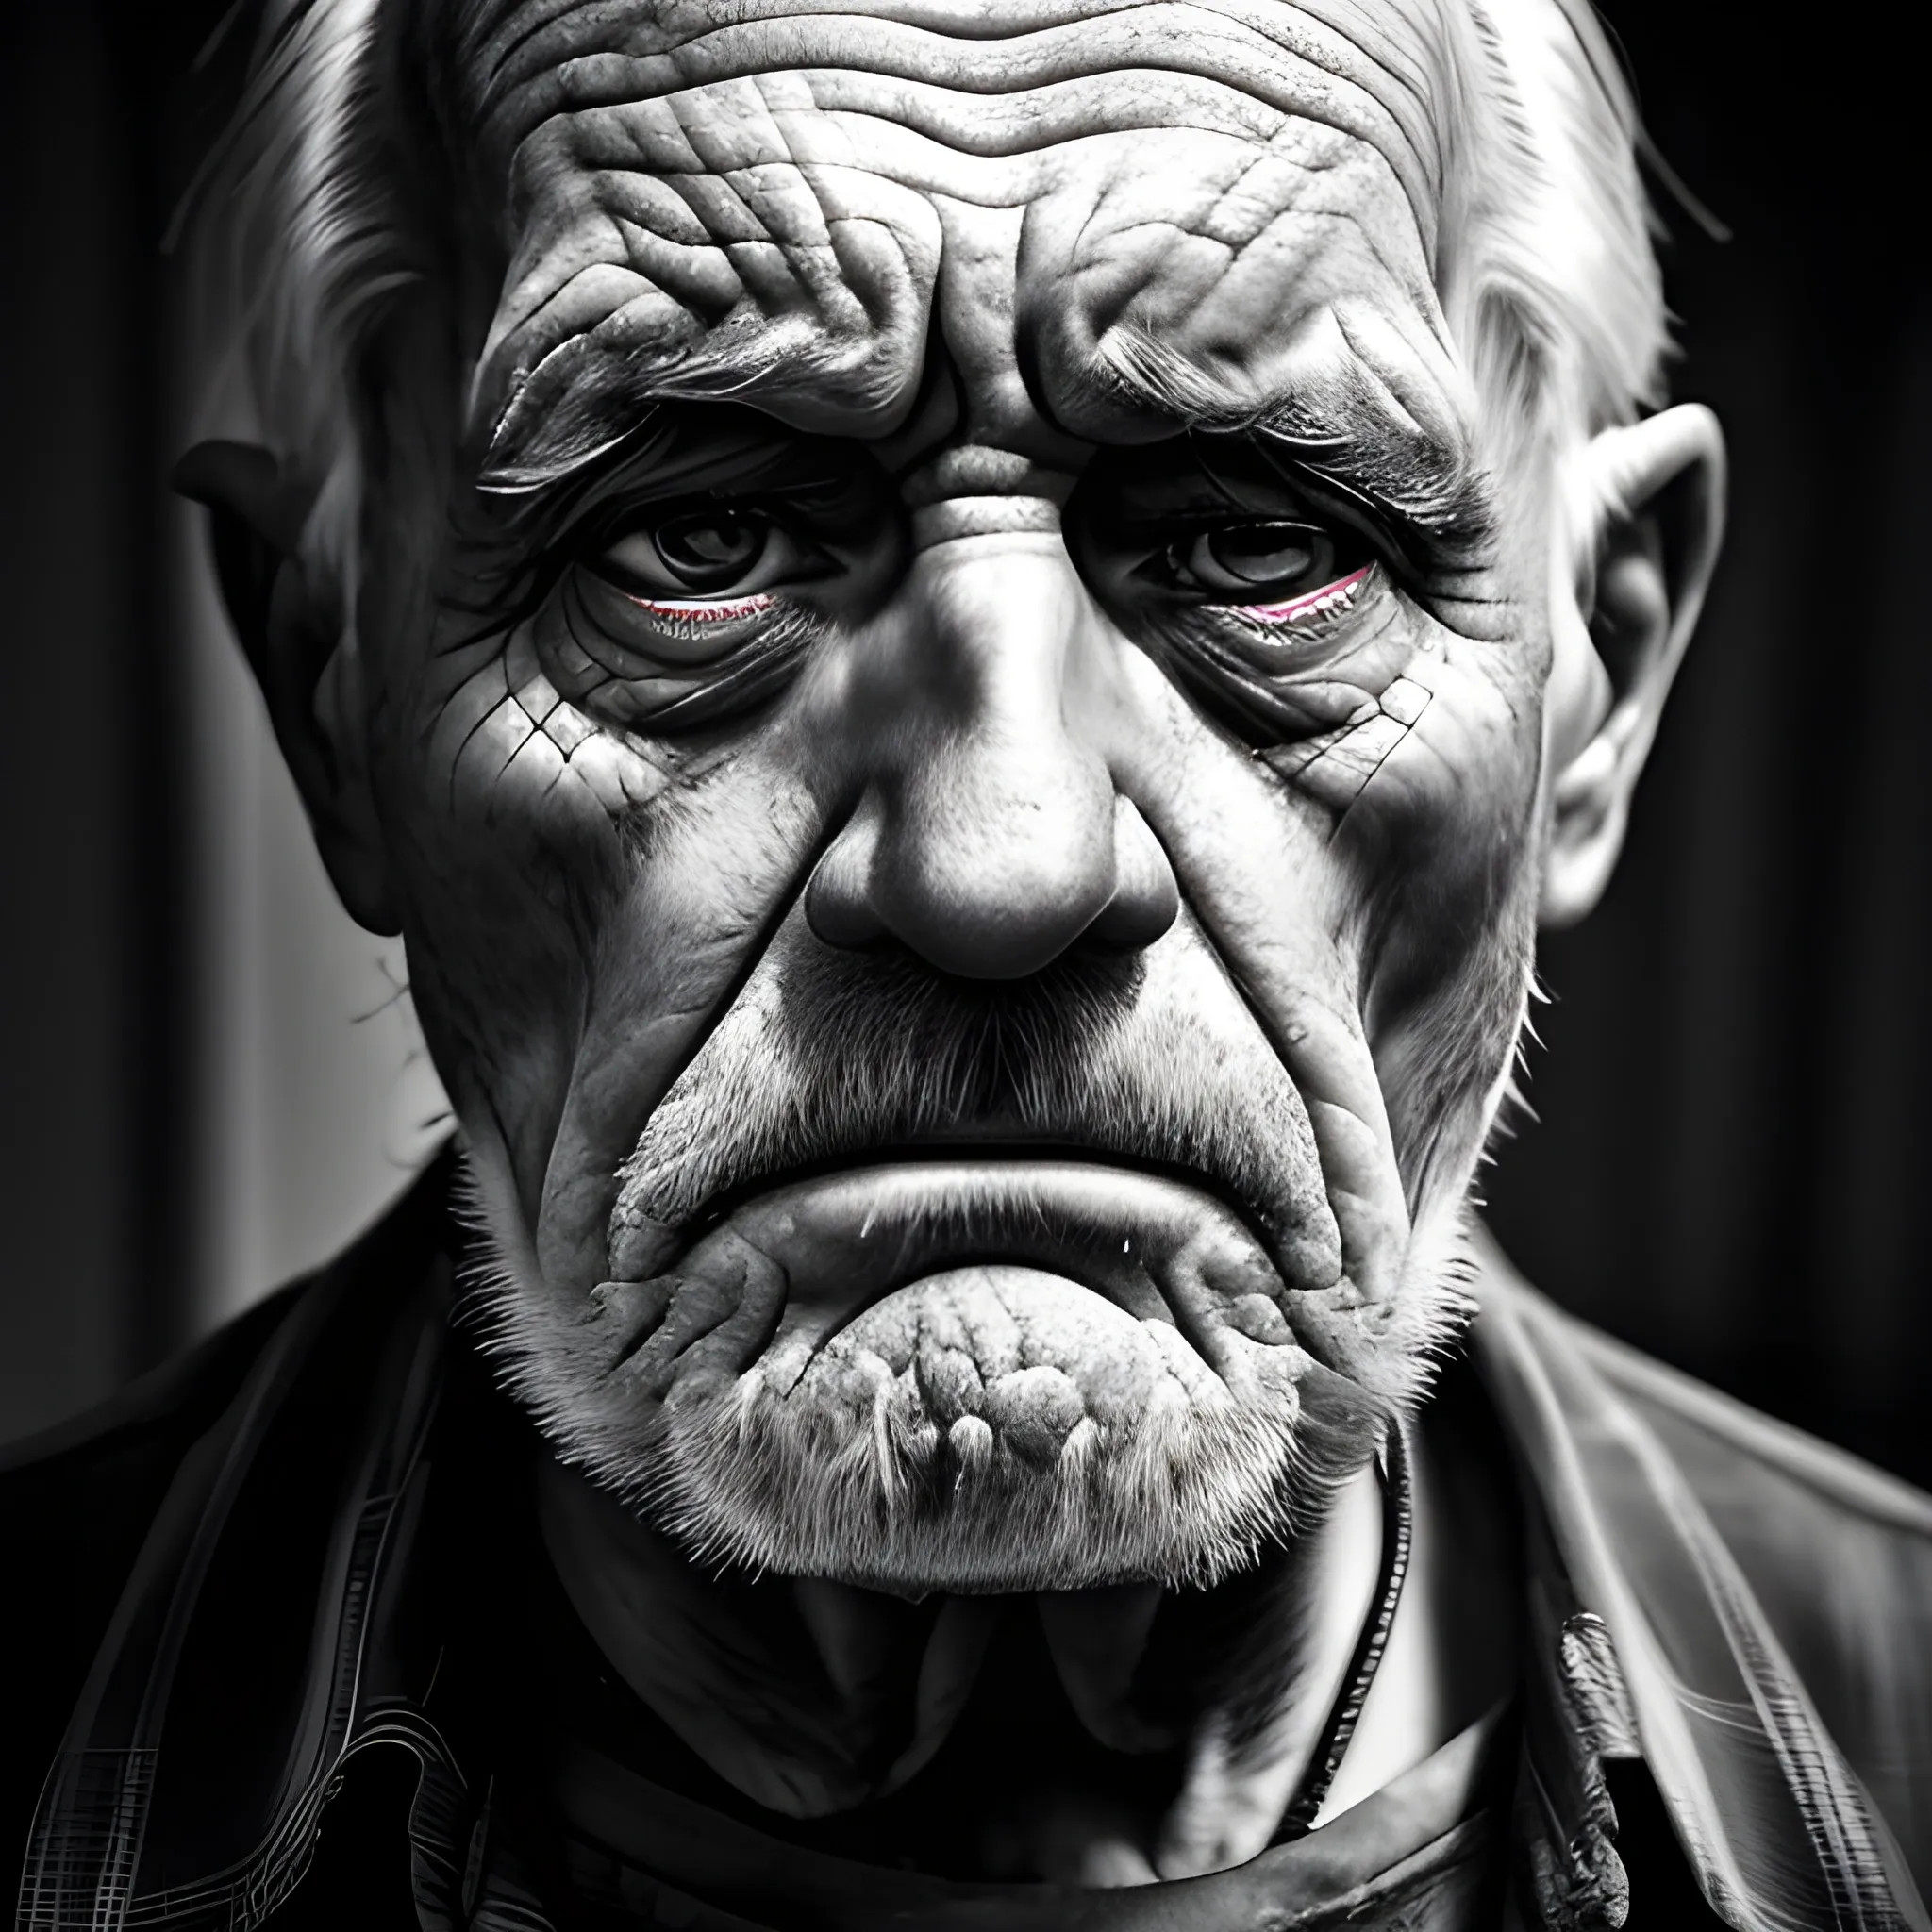 a sad old man face darknees